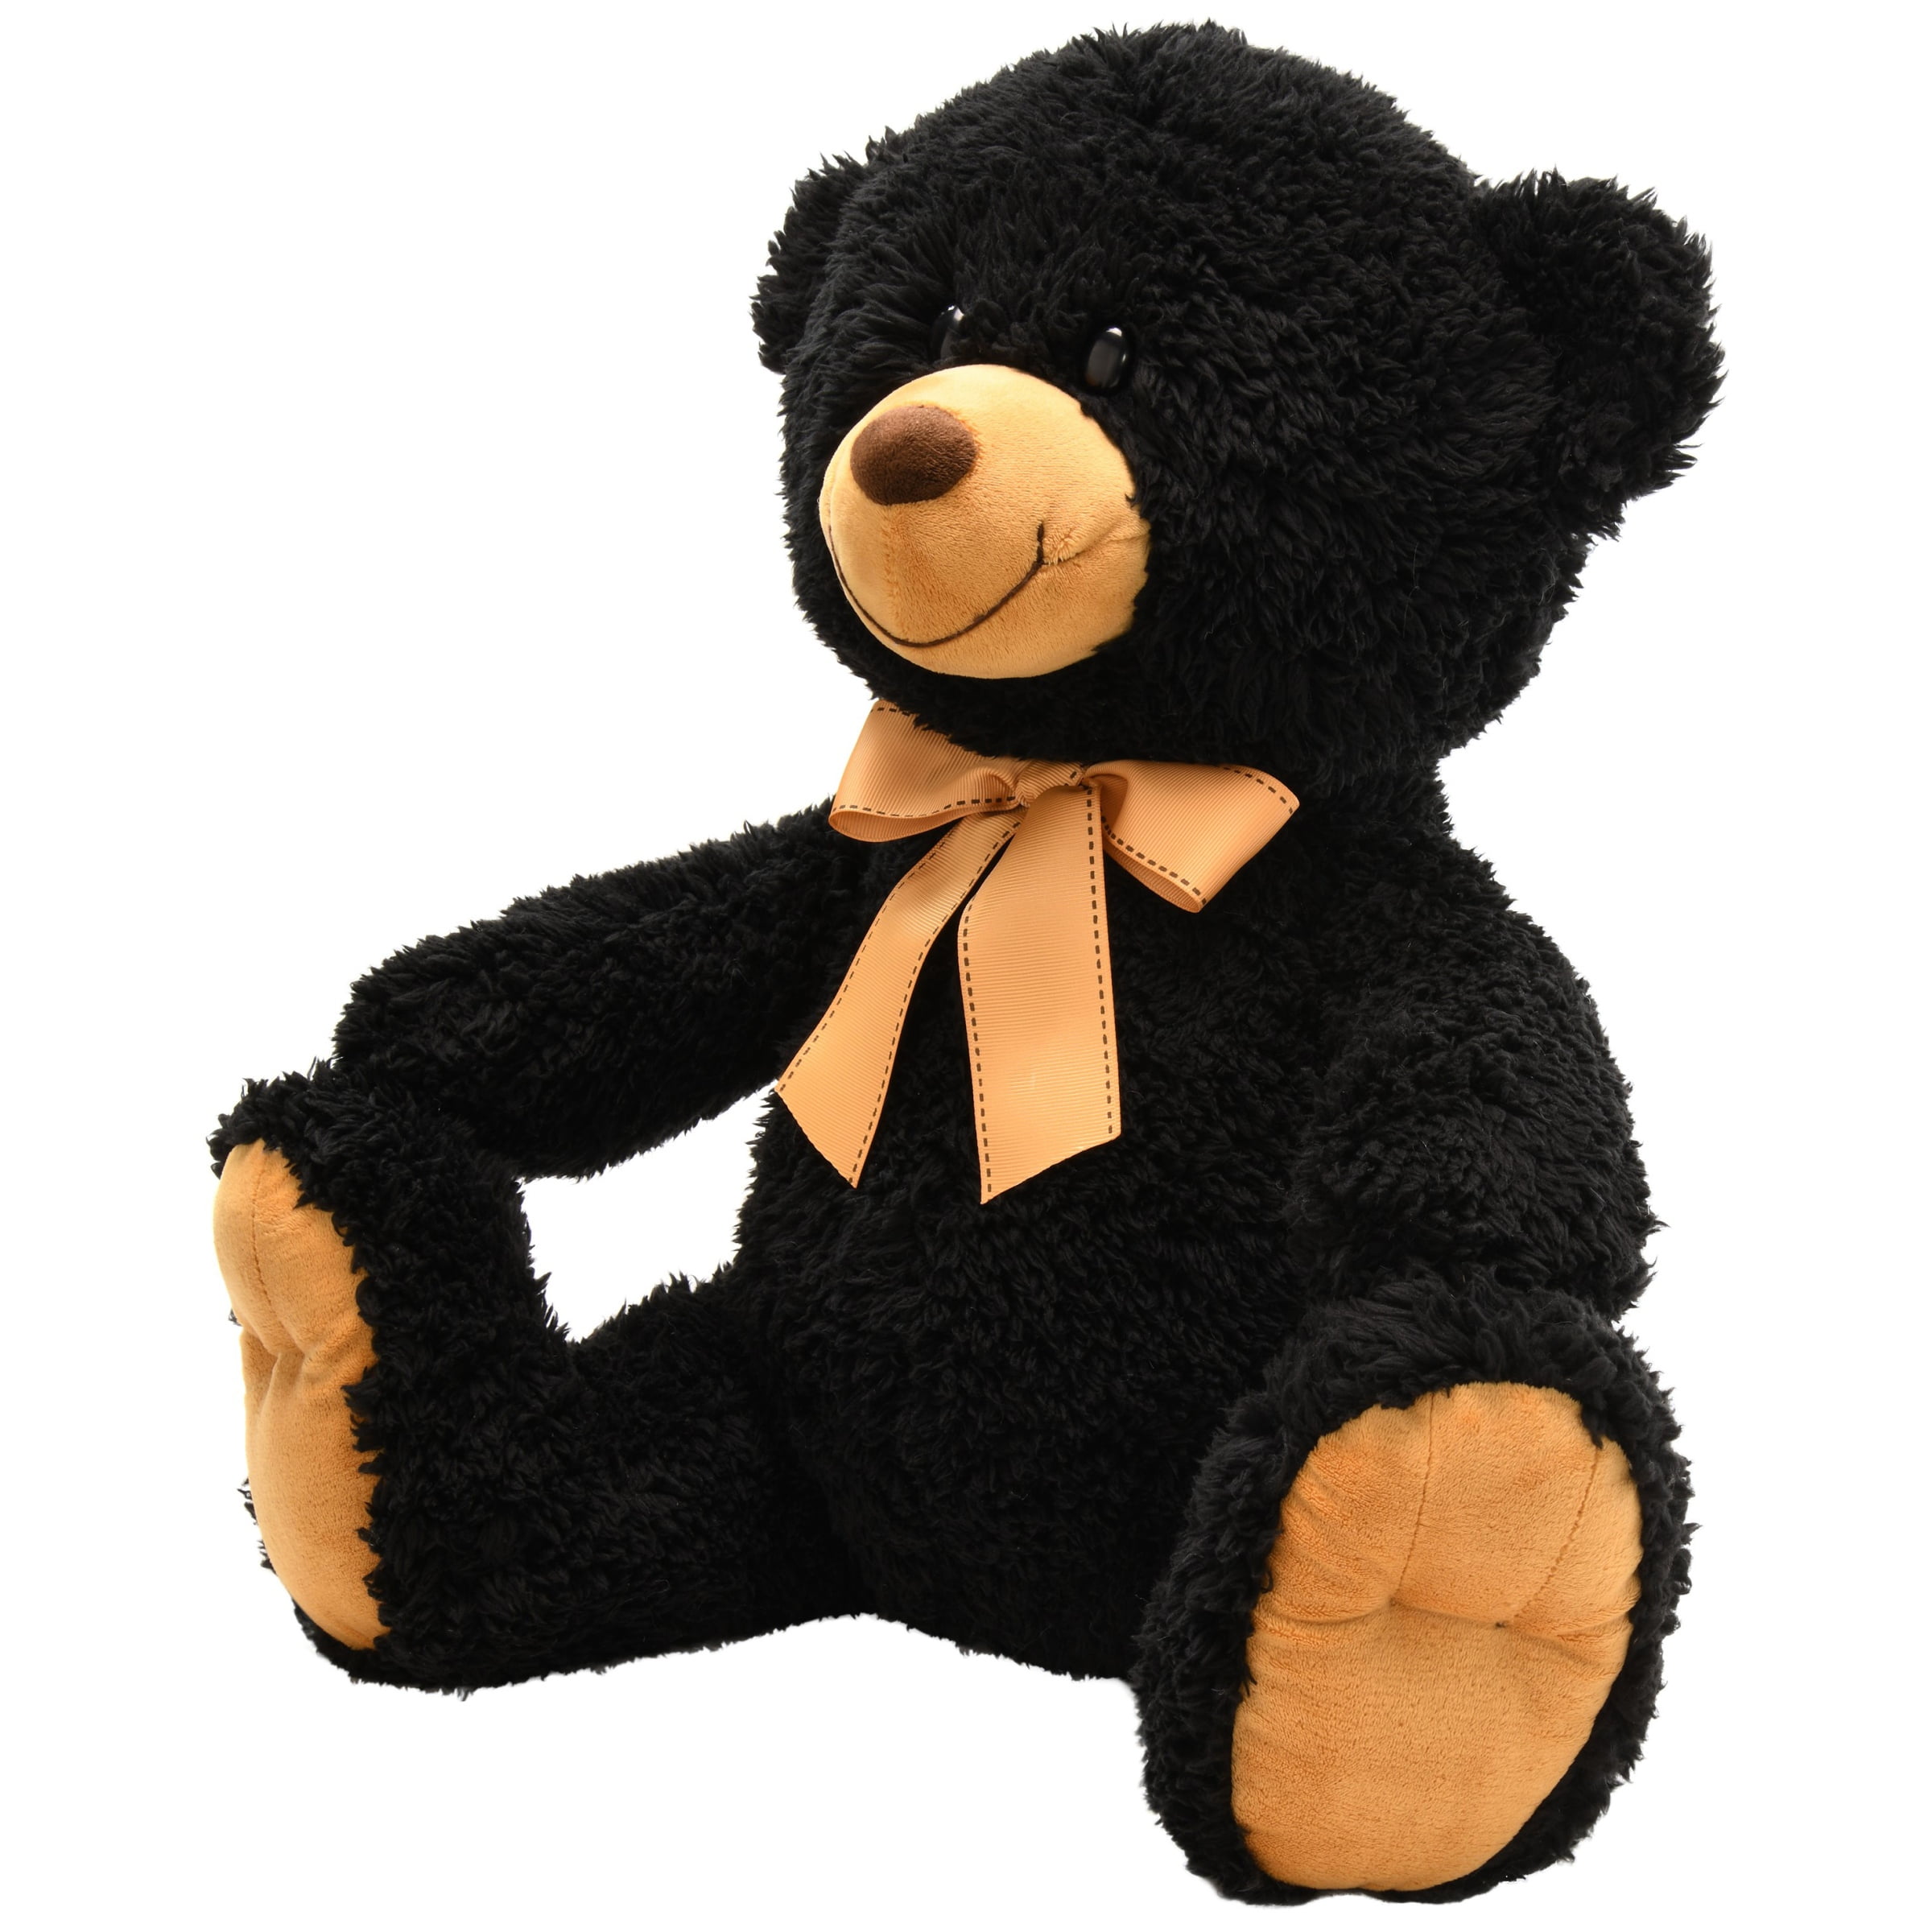 black bear toy